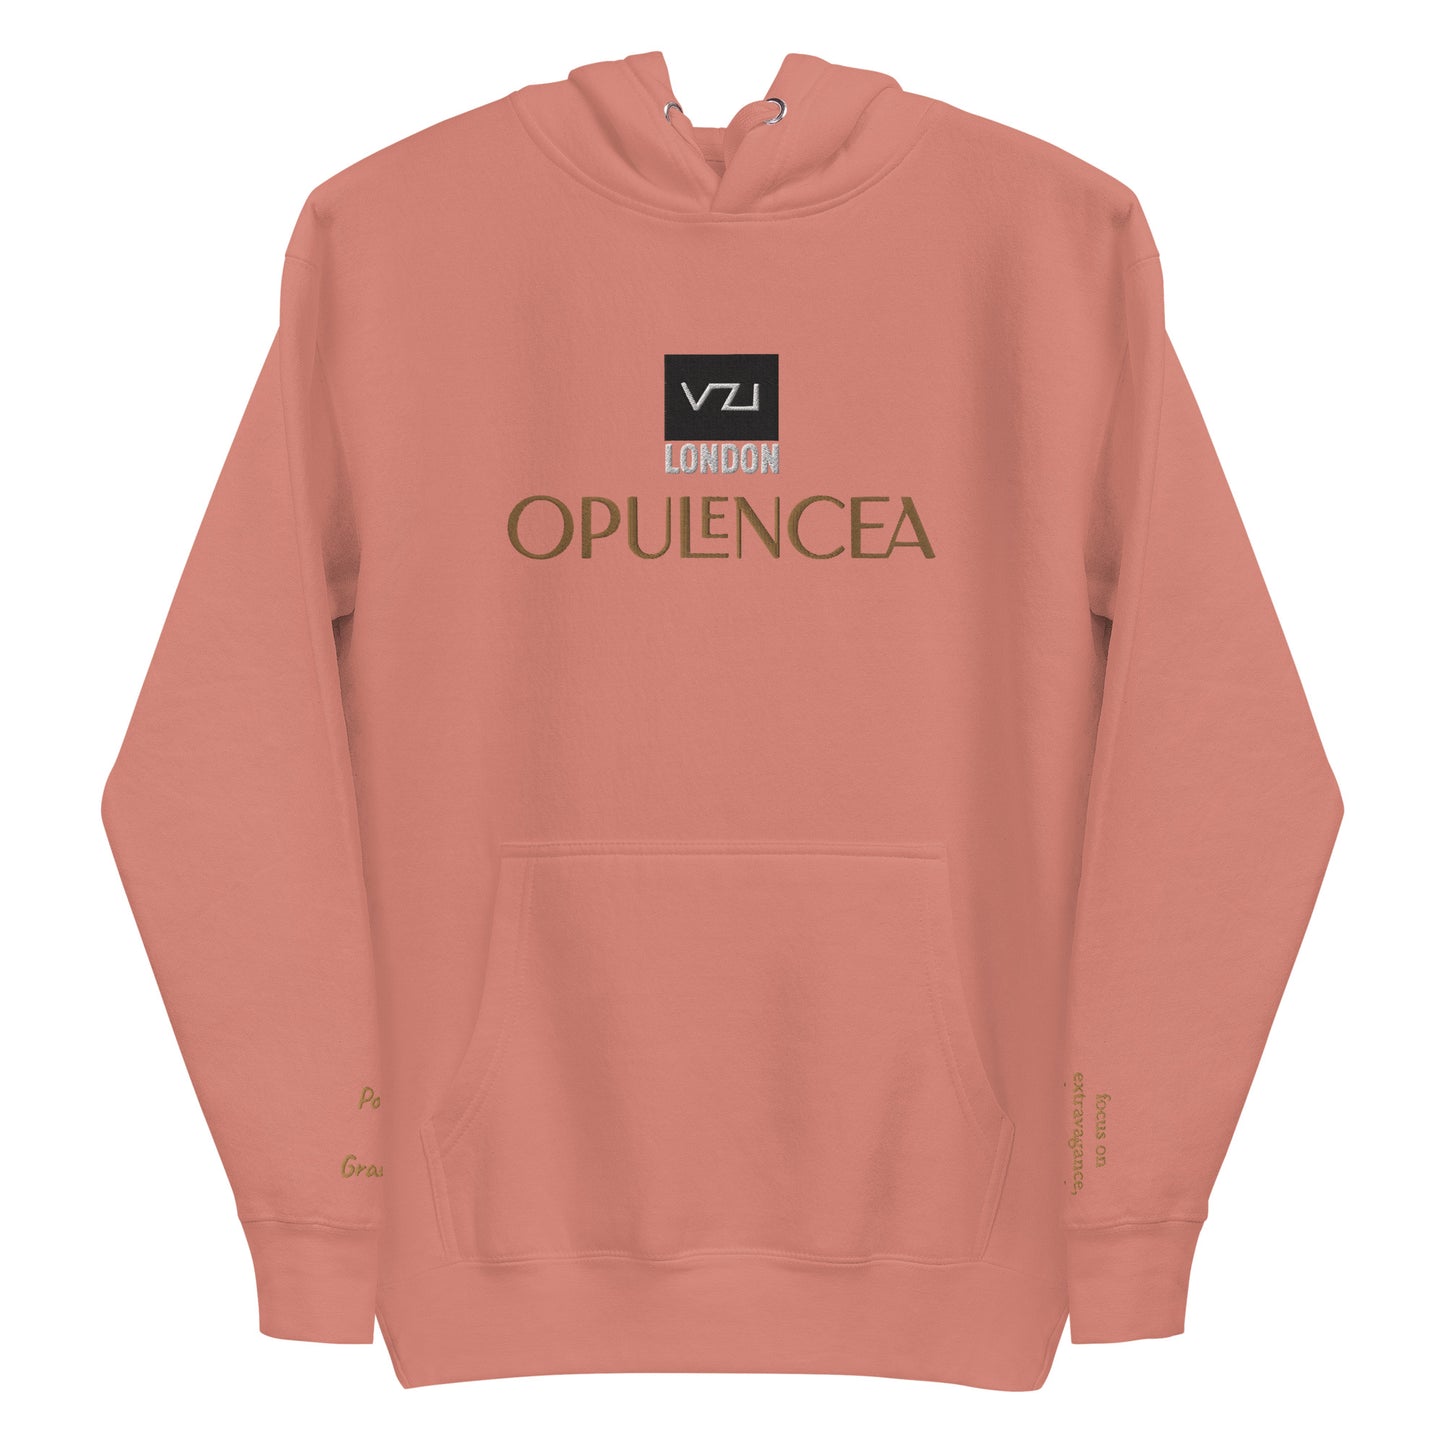 Opulencea: Unisex, Classic Cotton: Focus on extravagance, luxury, and indulgence(Posh Grandeur)